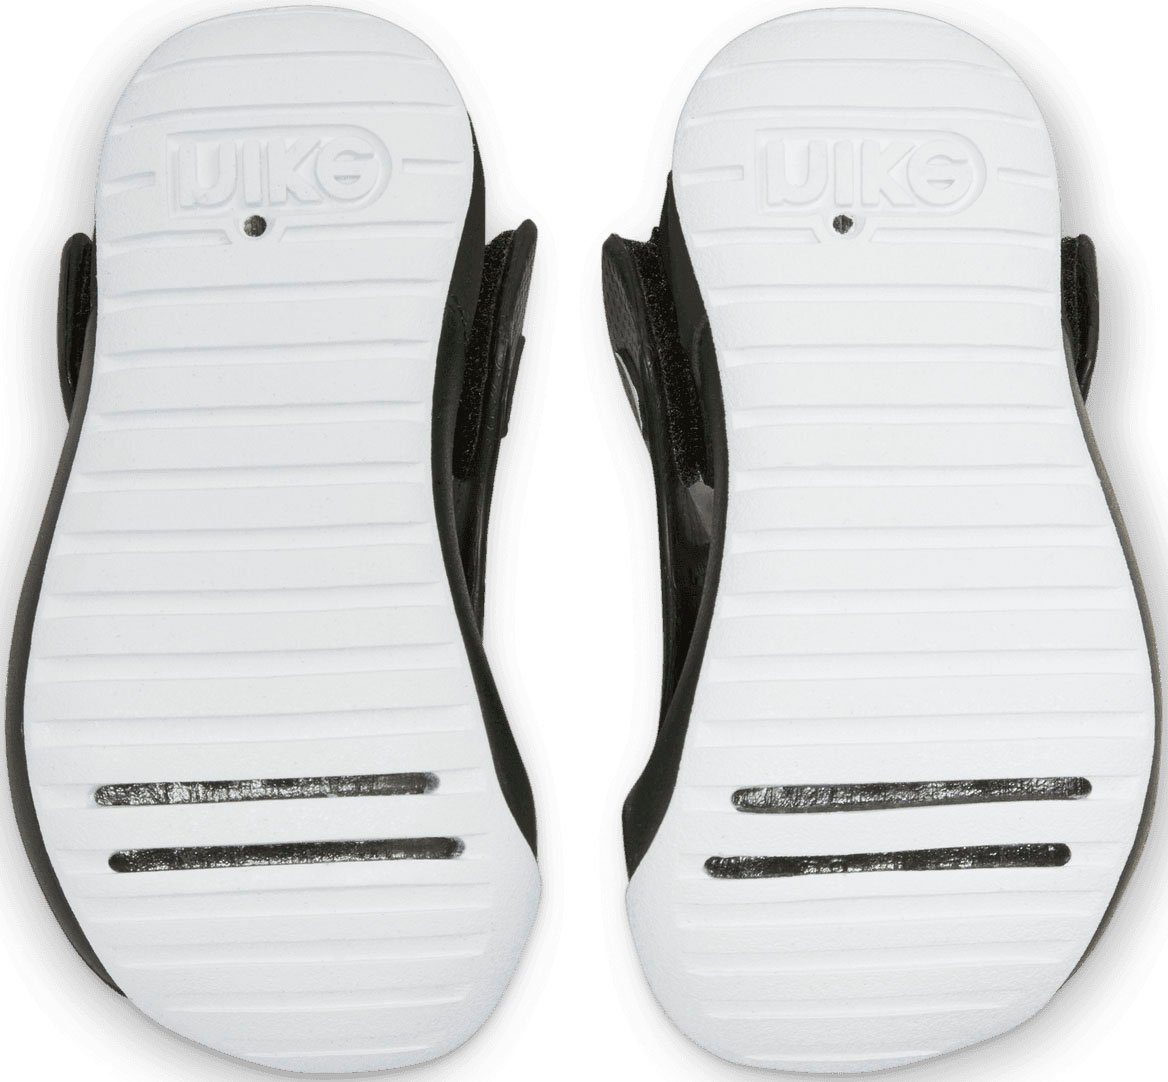 Sunray 3 Protect Sandale Nike